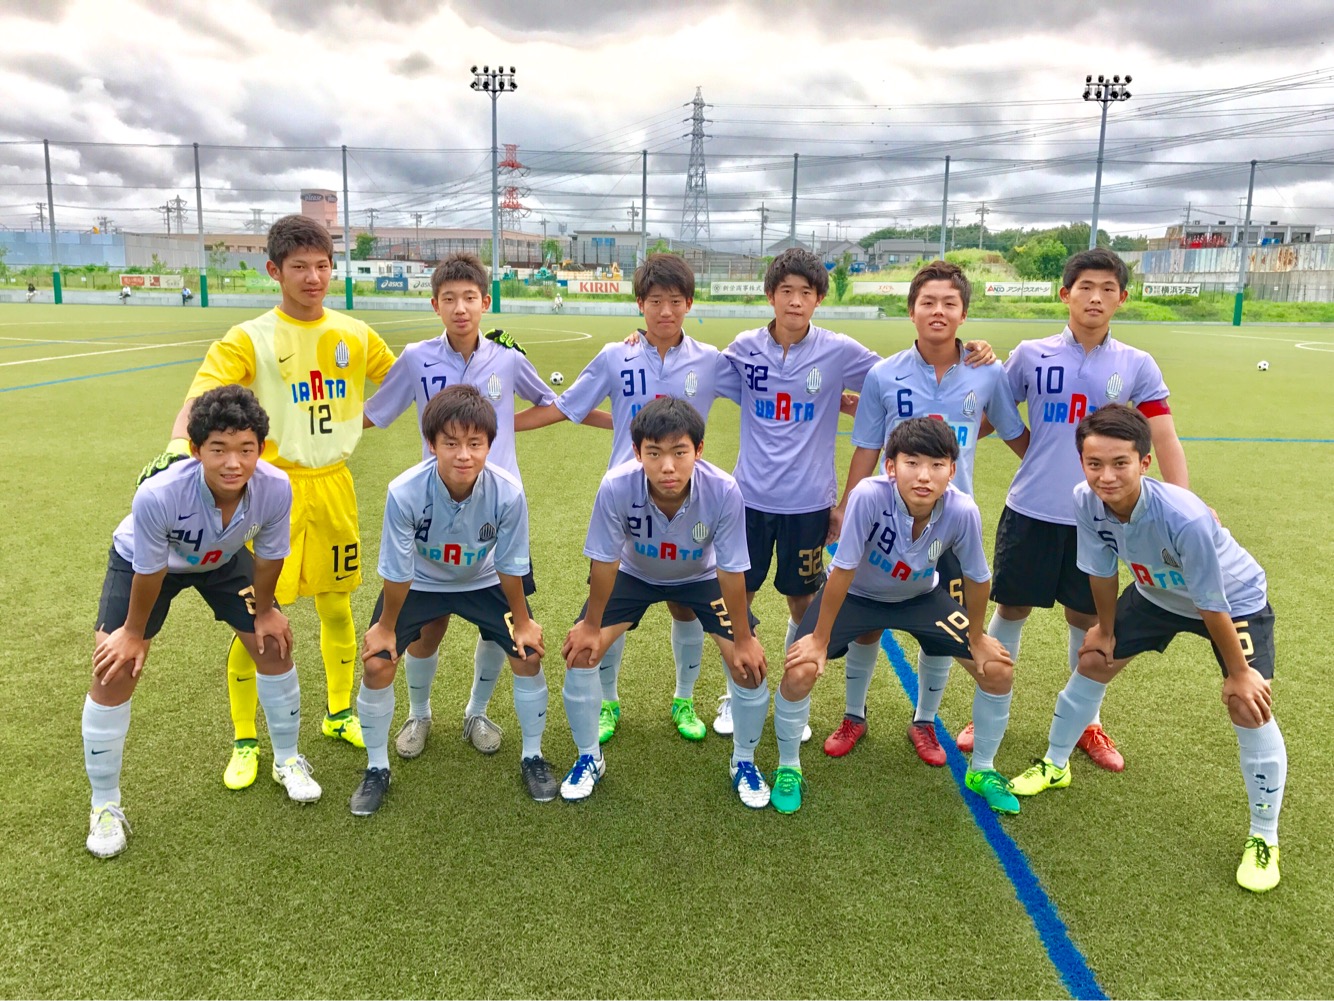 【U18】Jユースカップ関東予選 決勝トーナメント1回戦結果